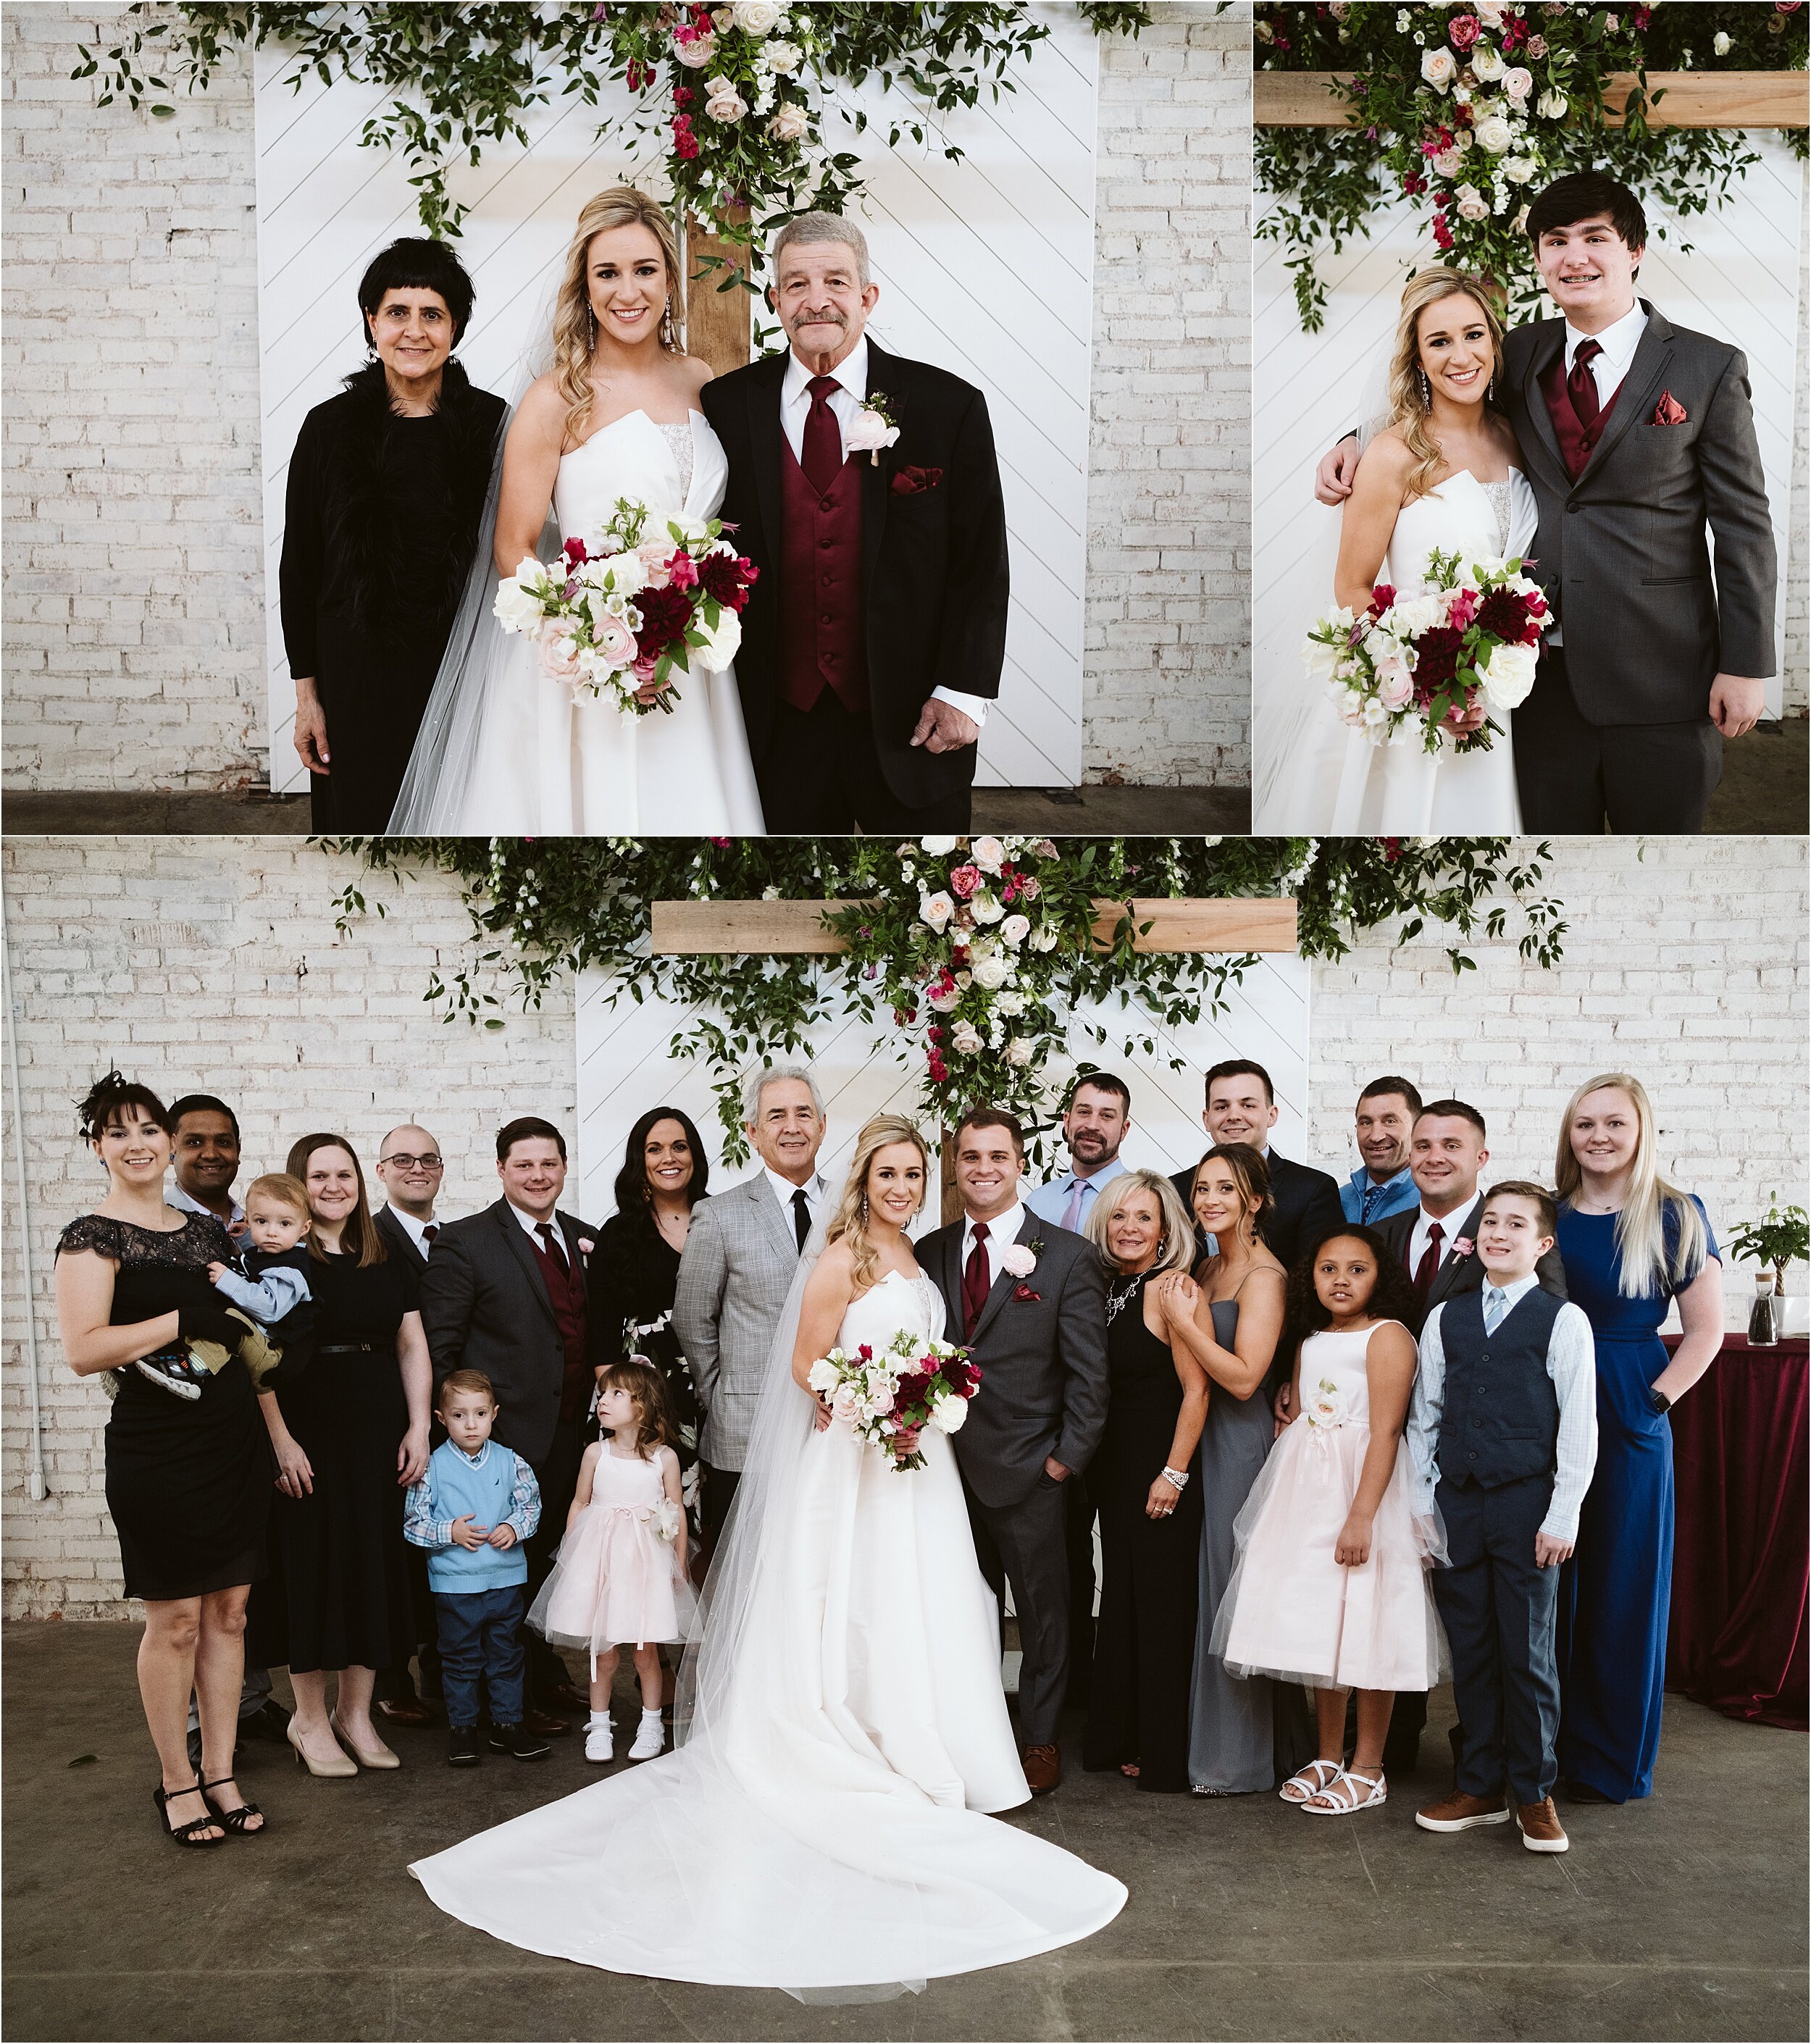 Family Photos at the Abbott Kansas City Wedding